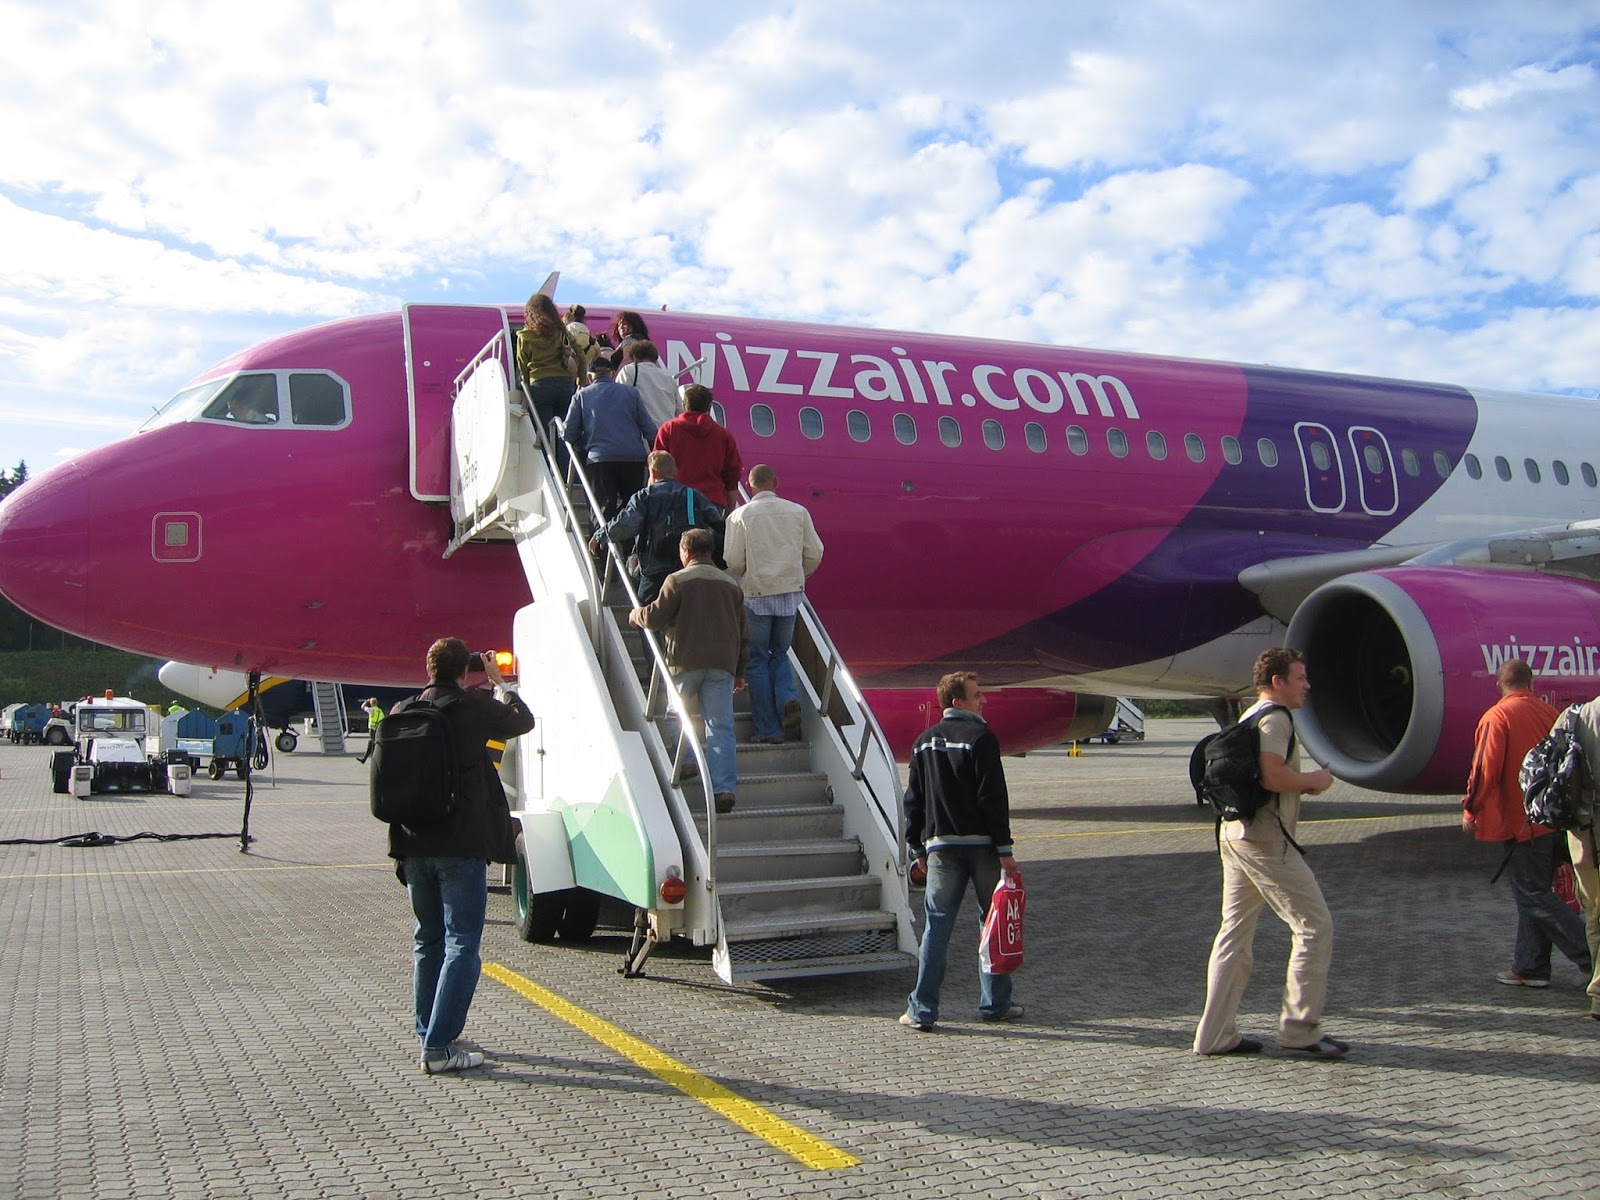 Wizz Air boarding @ trf (TRF).jpg